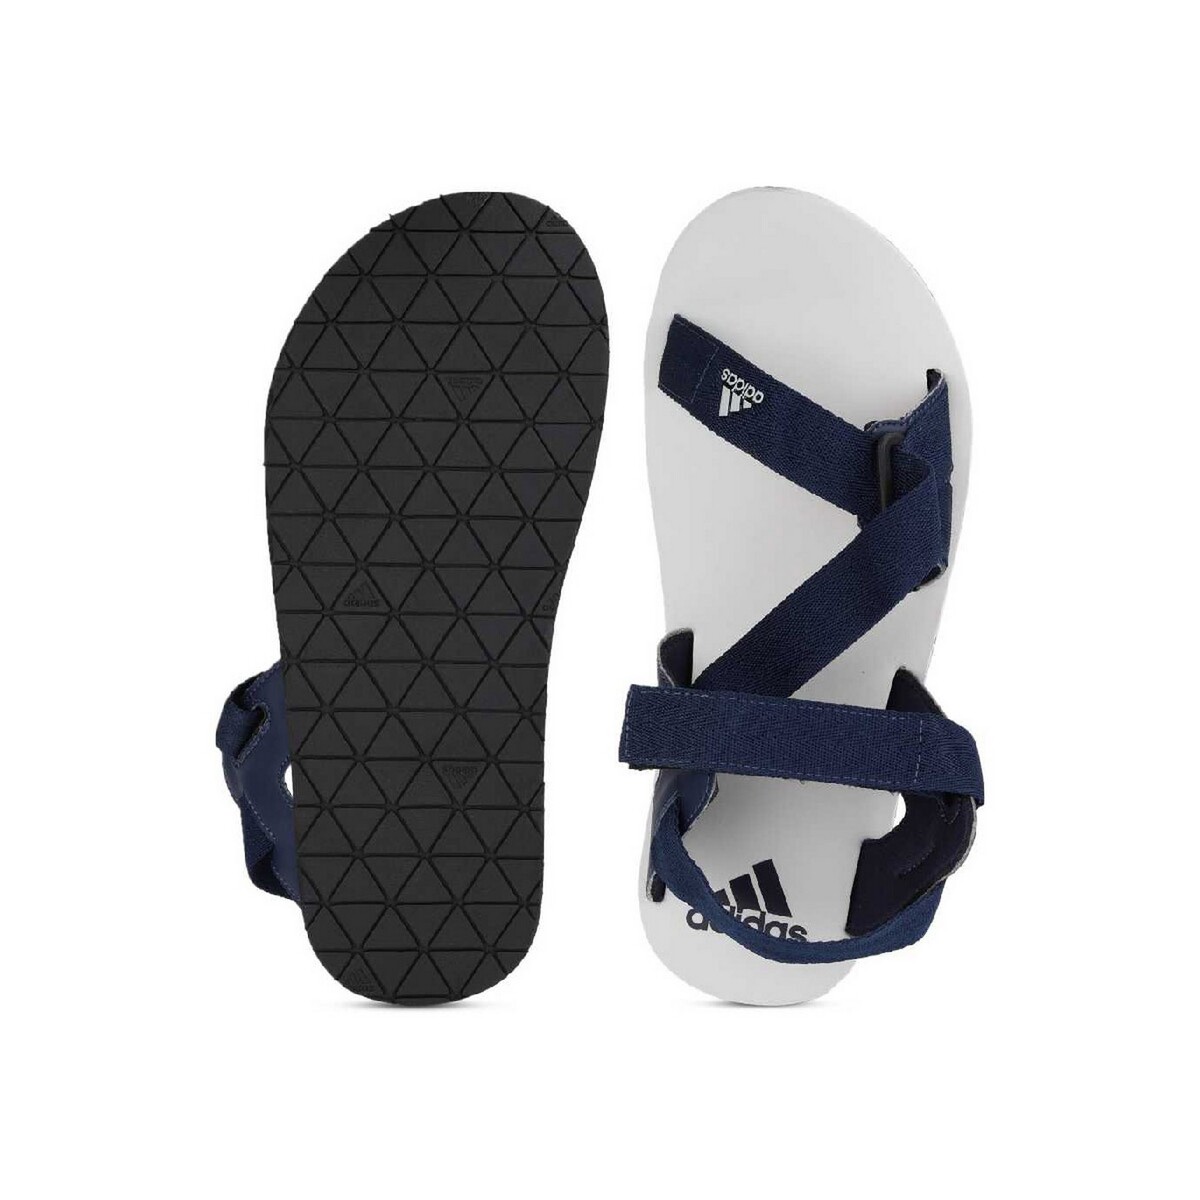 Adidas Mens Sandal CM6001, 9